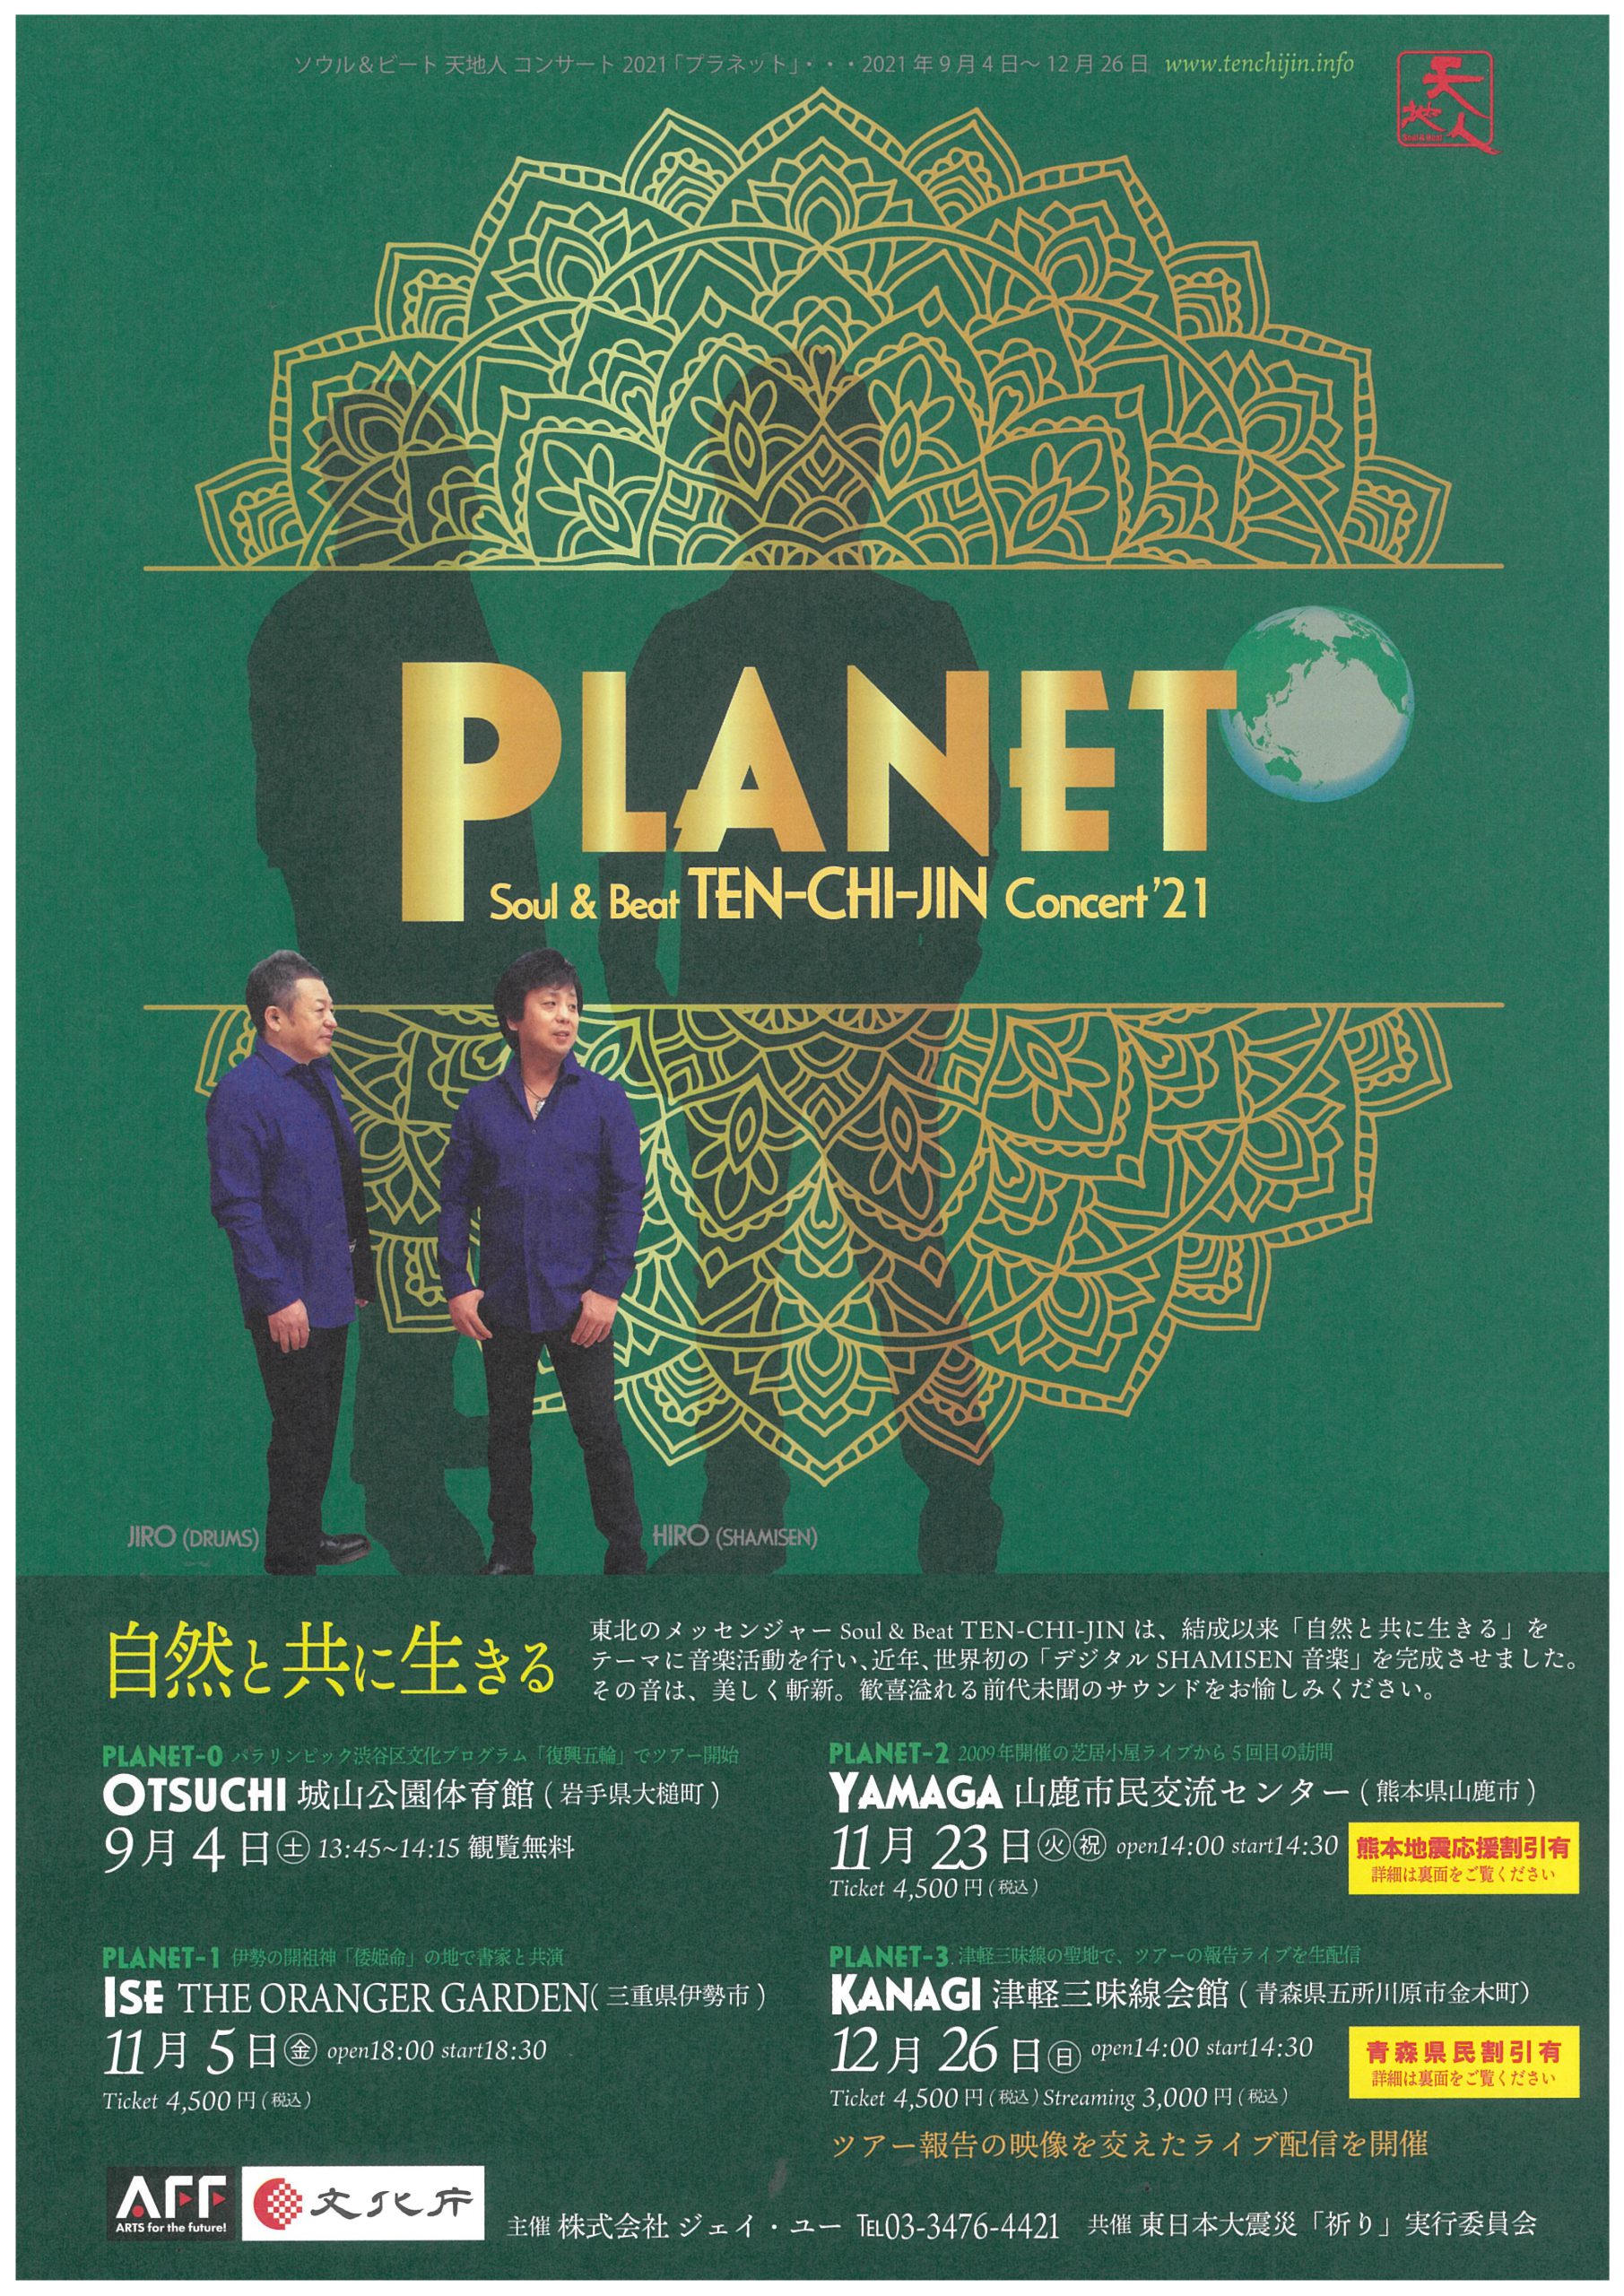 Planet Soul Beat Ten Chi Jin Concert 21 山鹿のイベント 山鹿探訪なび 山鹿市の観光ガイド